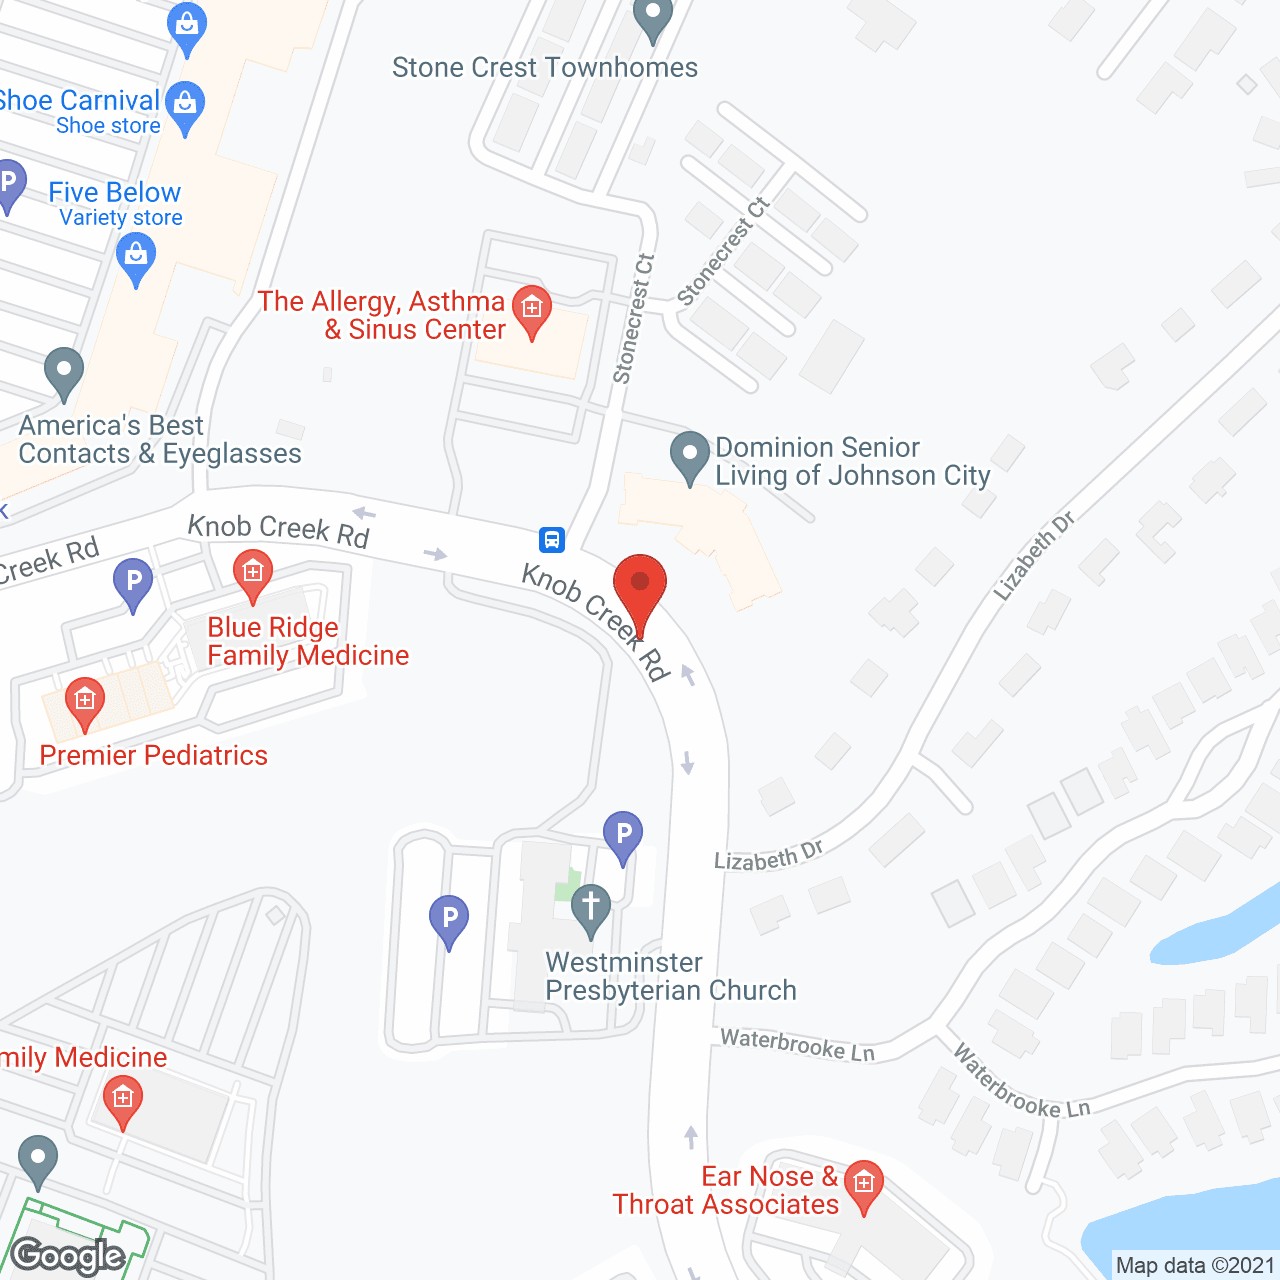 Dominion Senior Living of Johnson City in google map